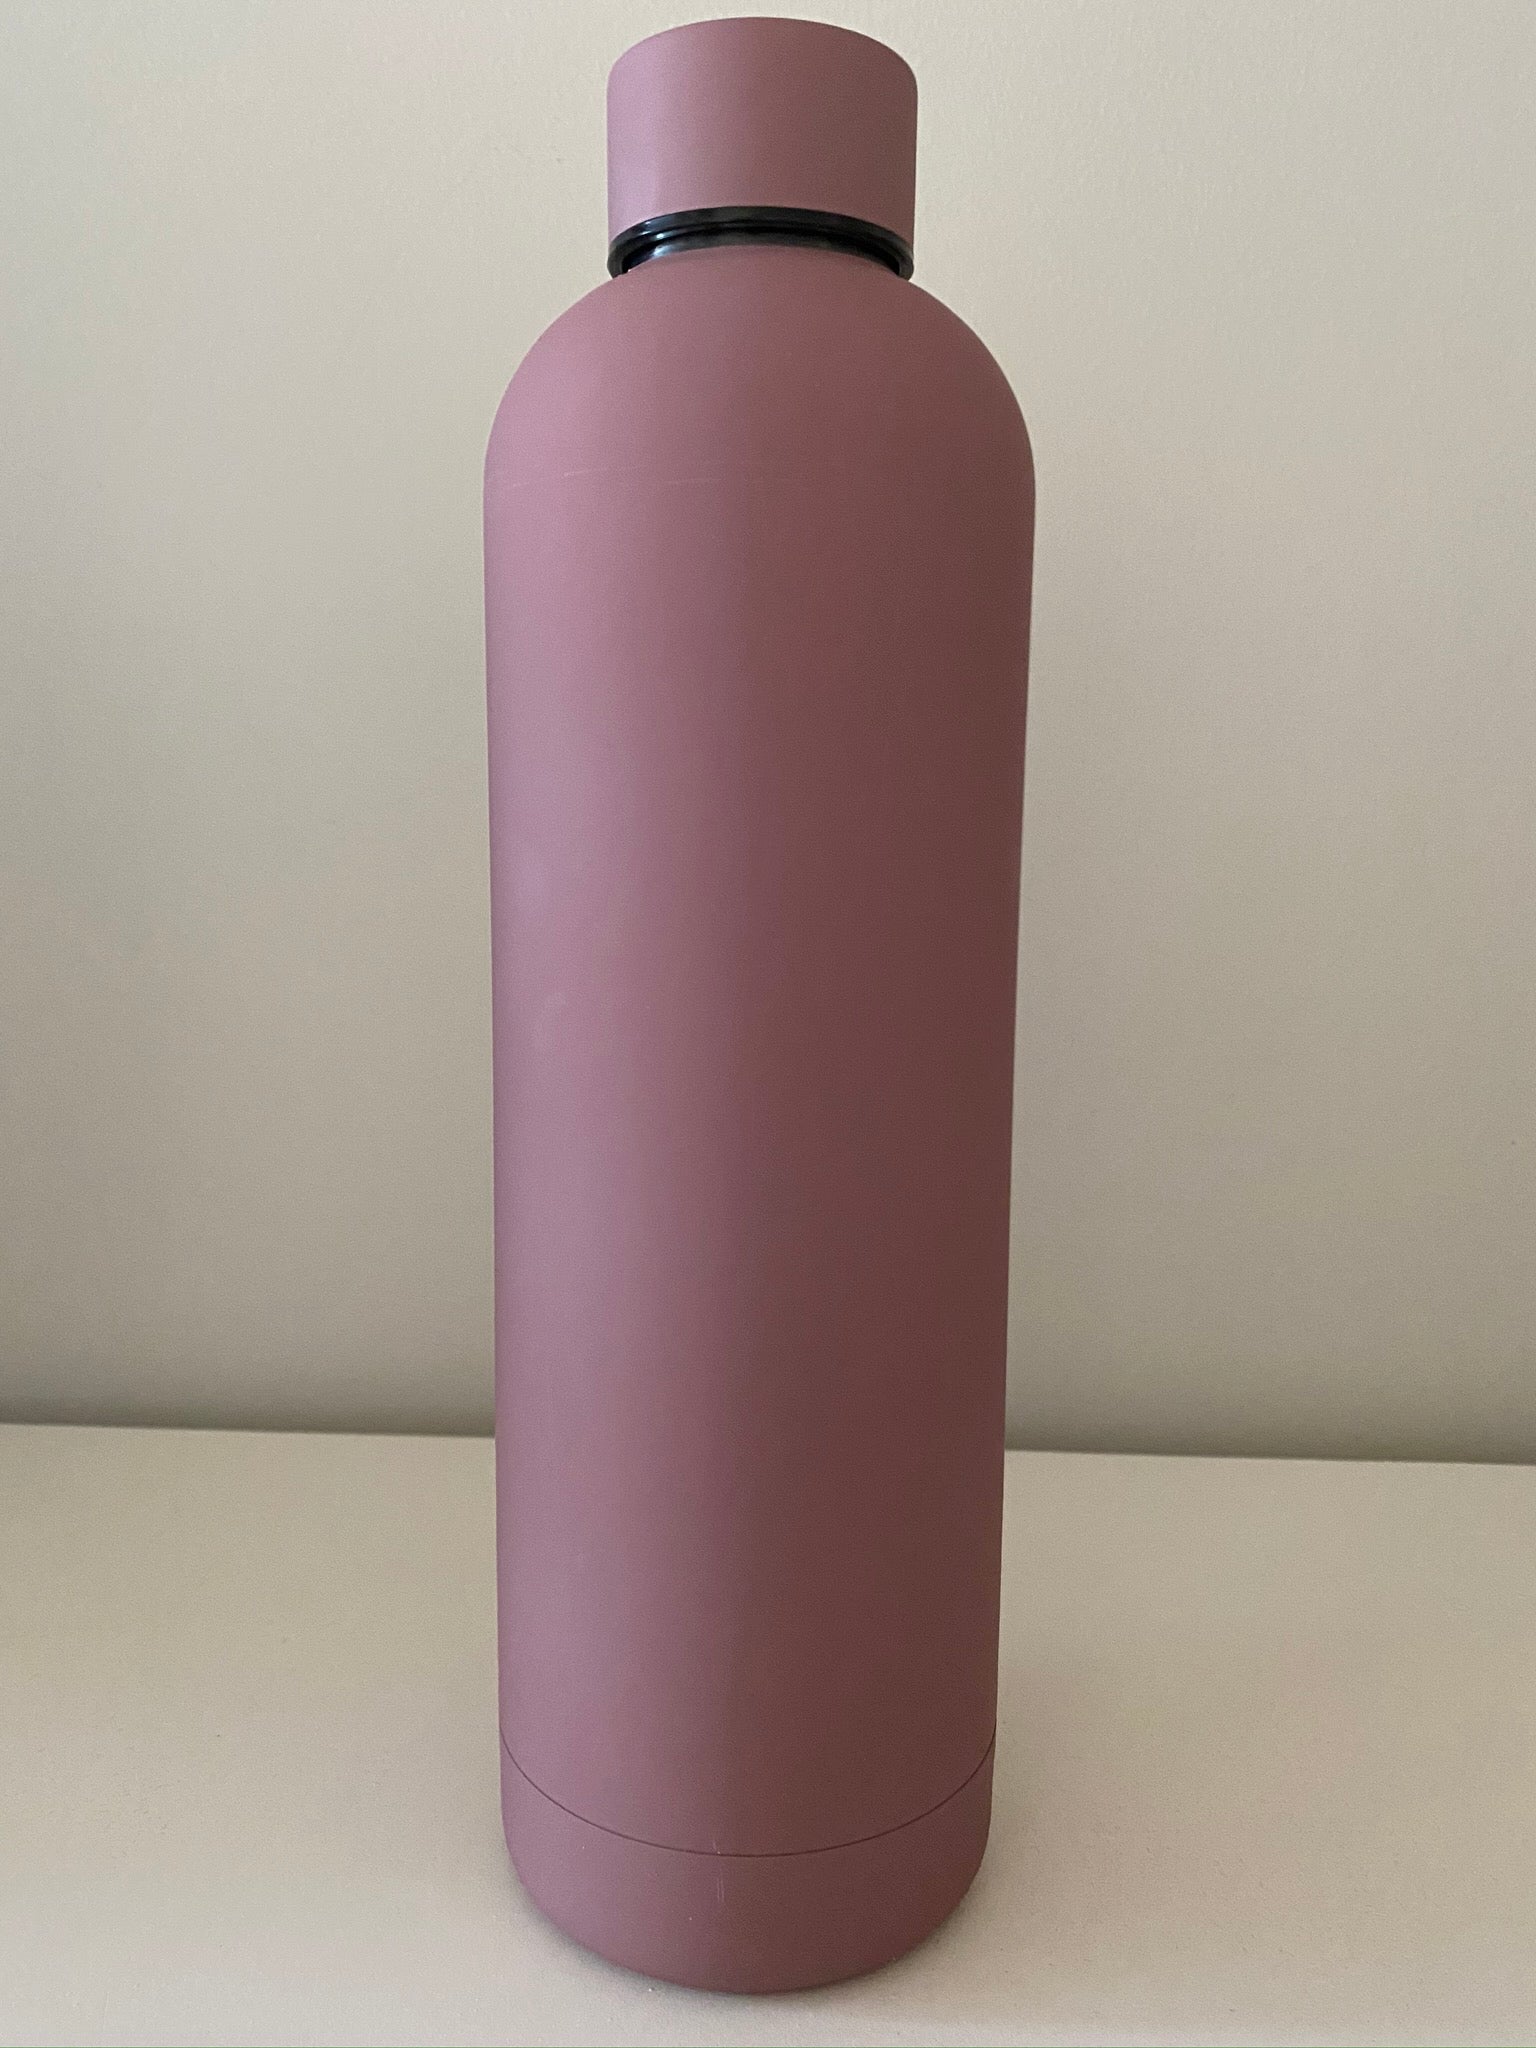 750mL Stainless Steel Water Bottle